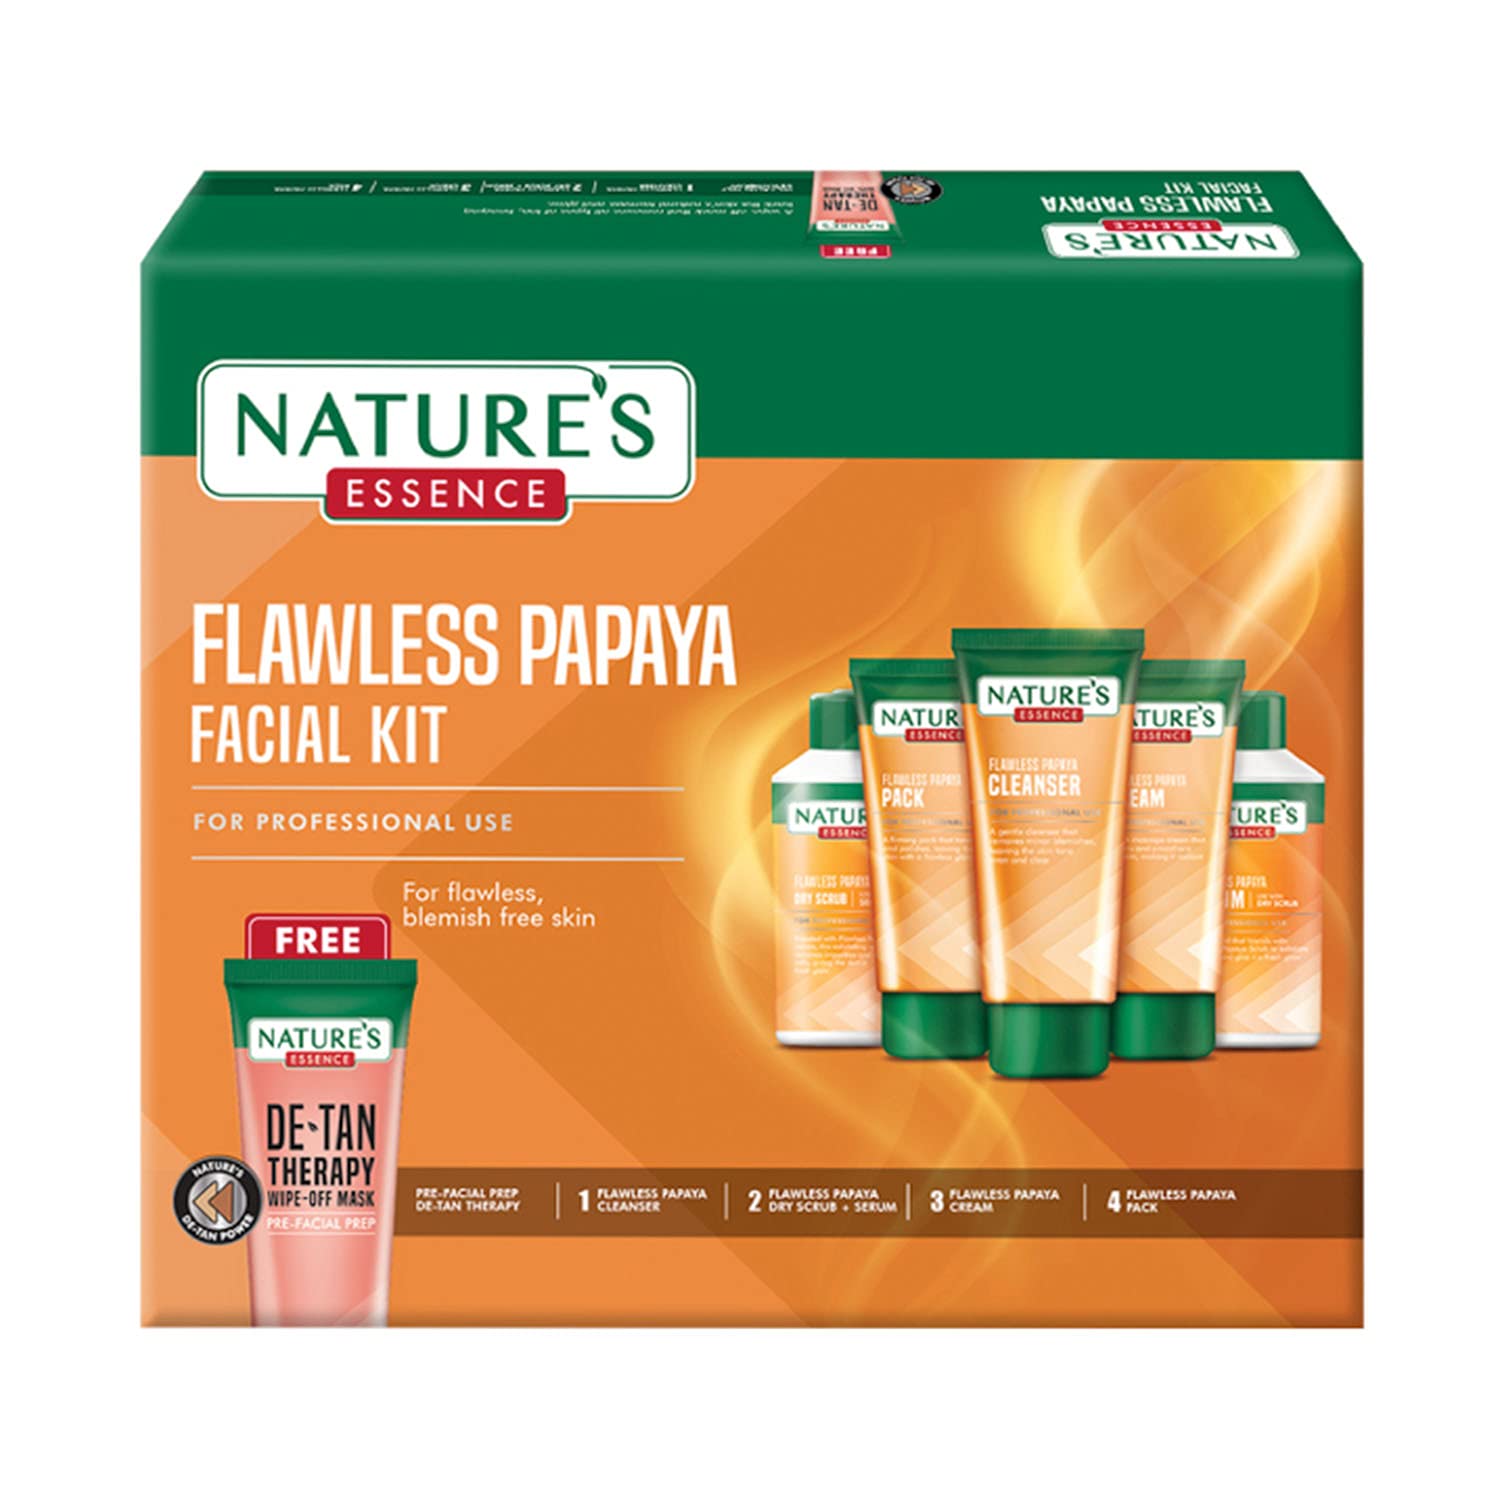 Nature's Essence Advanced Flawless Papaya Facial Kit700gm+200ml